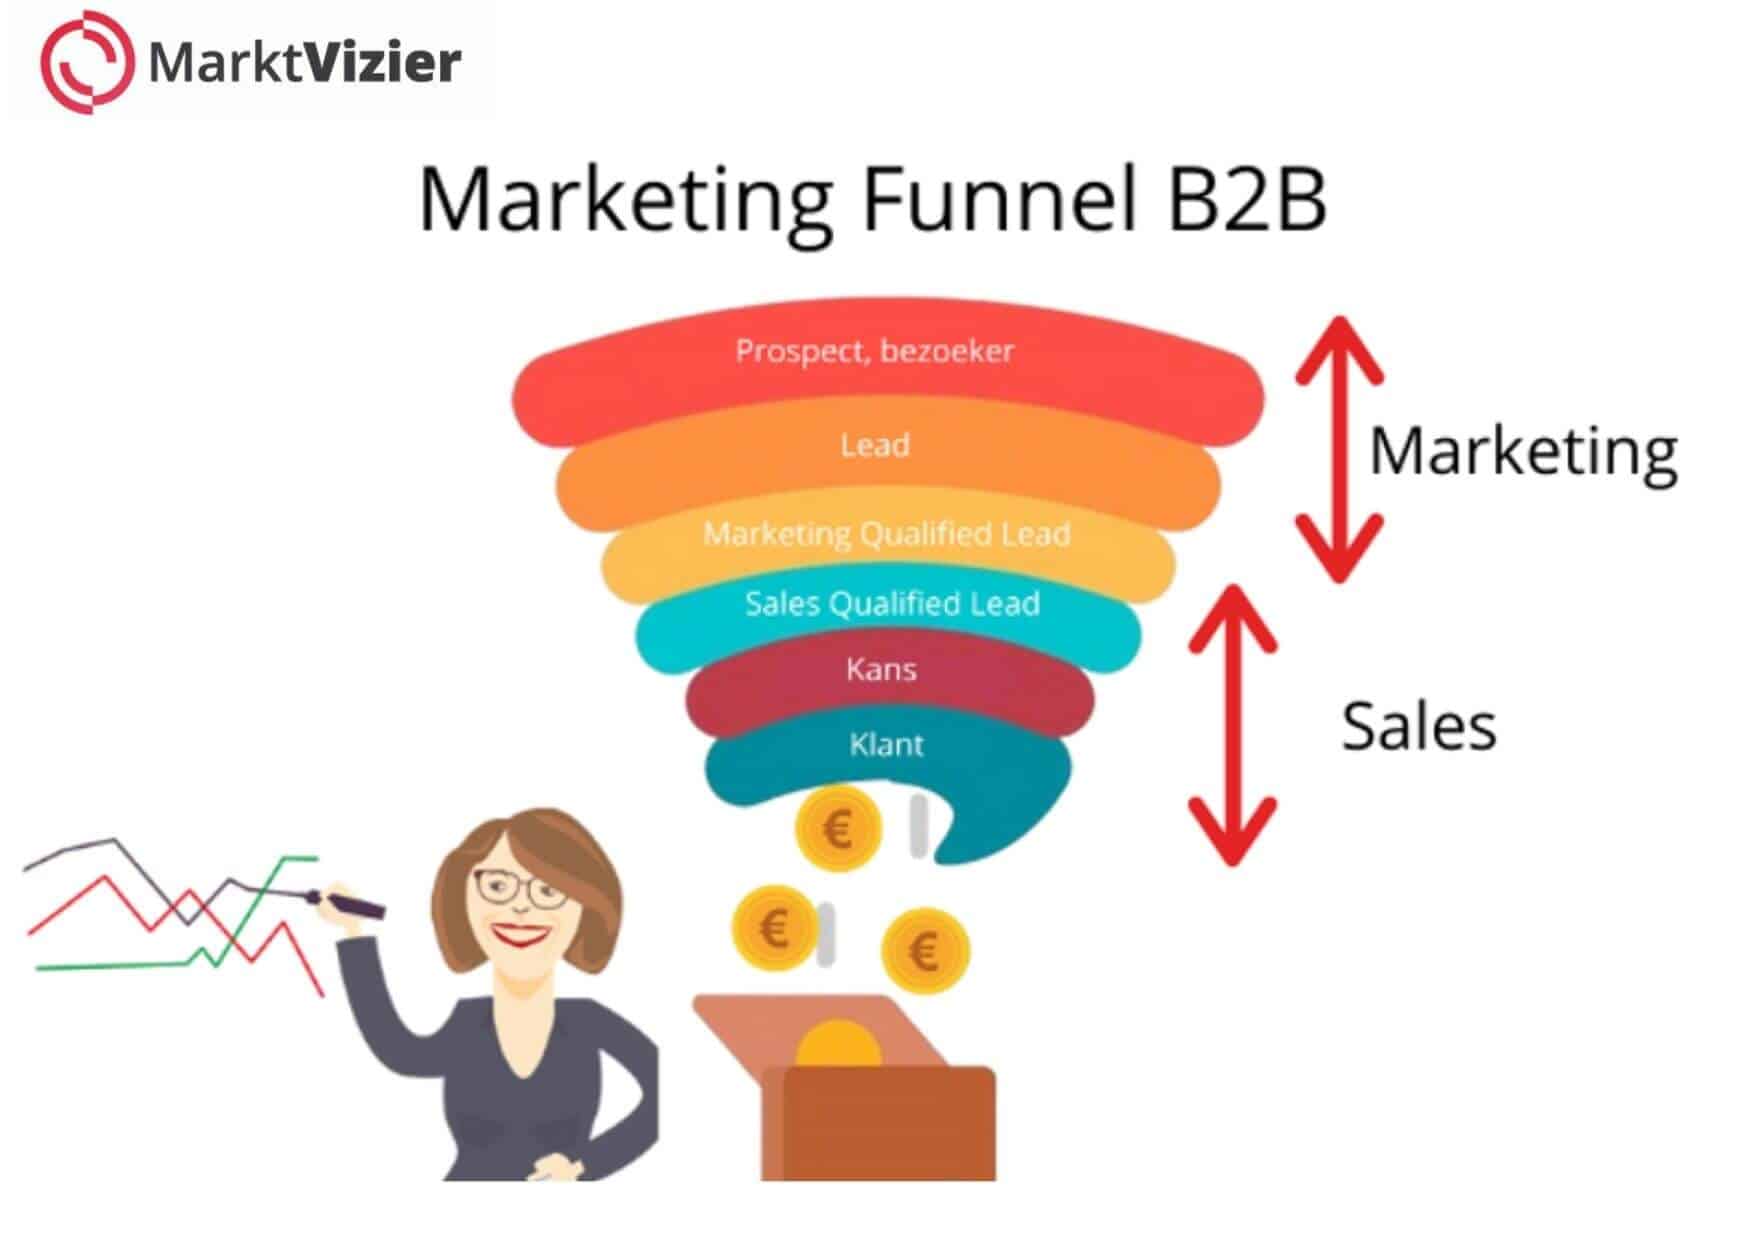 b2b marketing funnel 